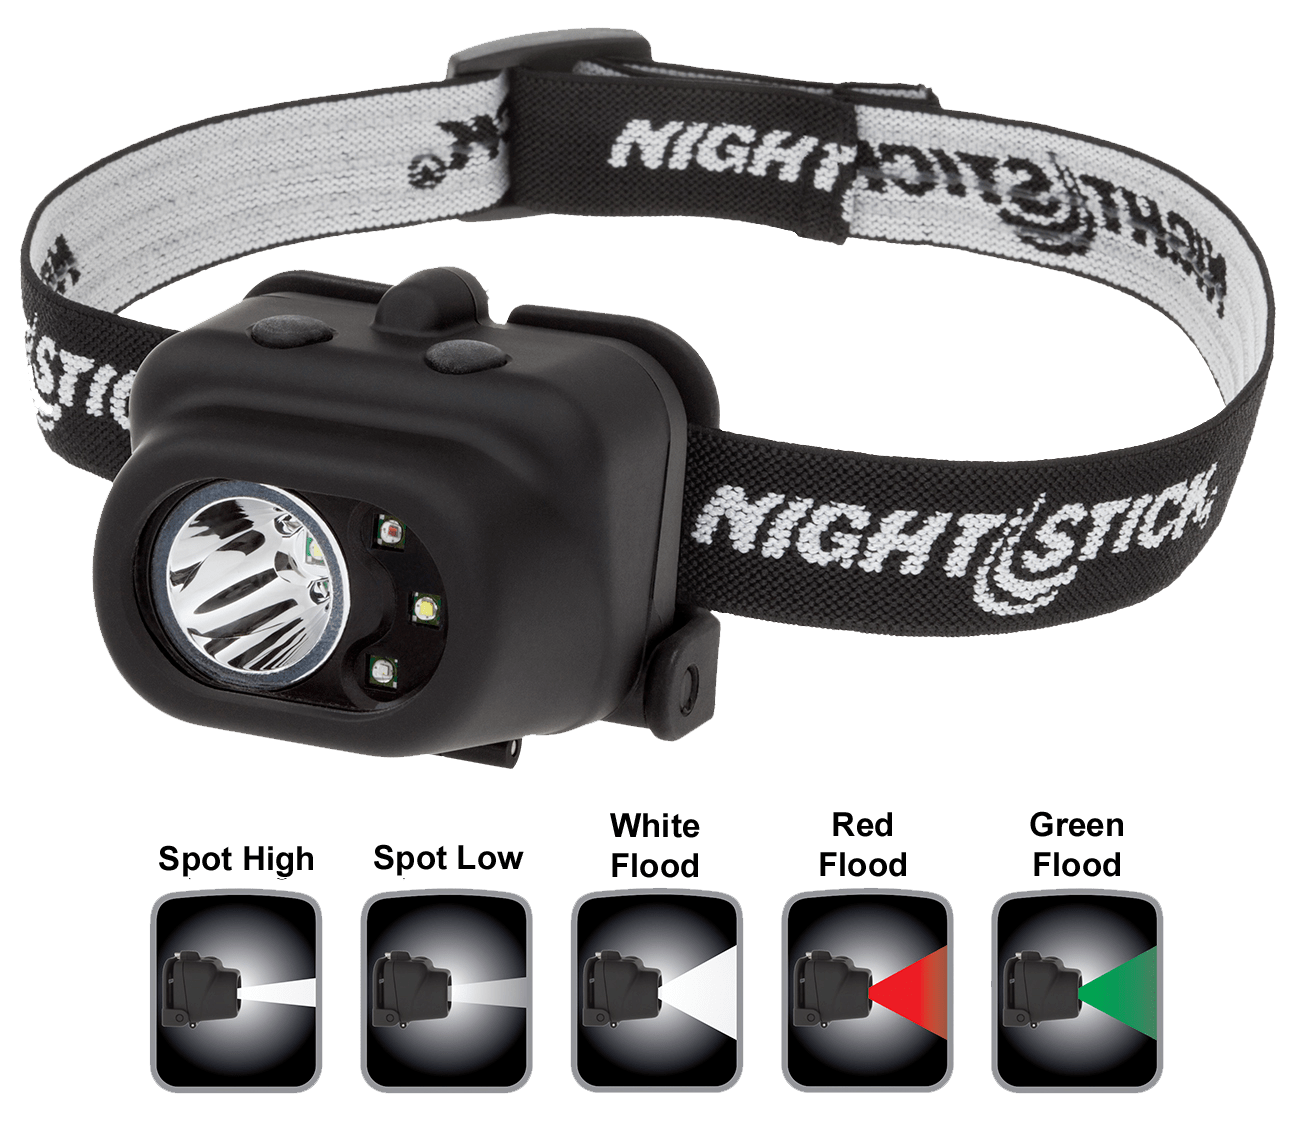 Nightstick Nightstick Multi-function Headlamp Black 210 Lumen Red/green/white Light General Hunting Accessories